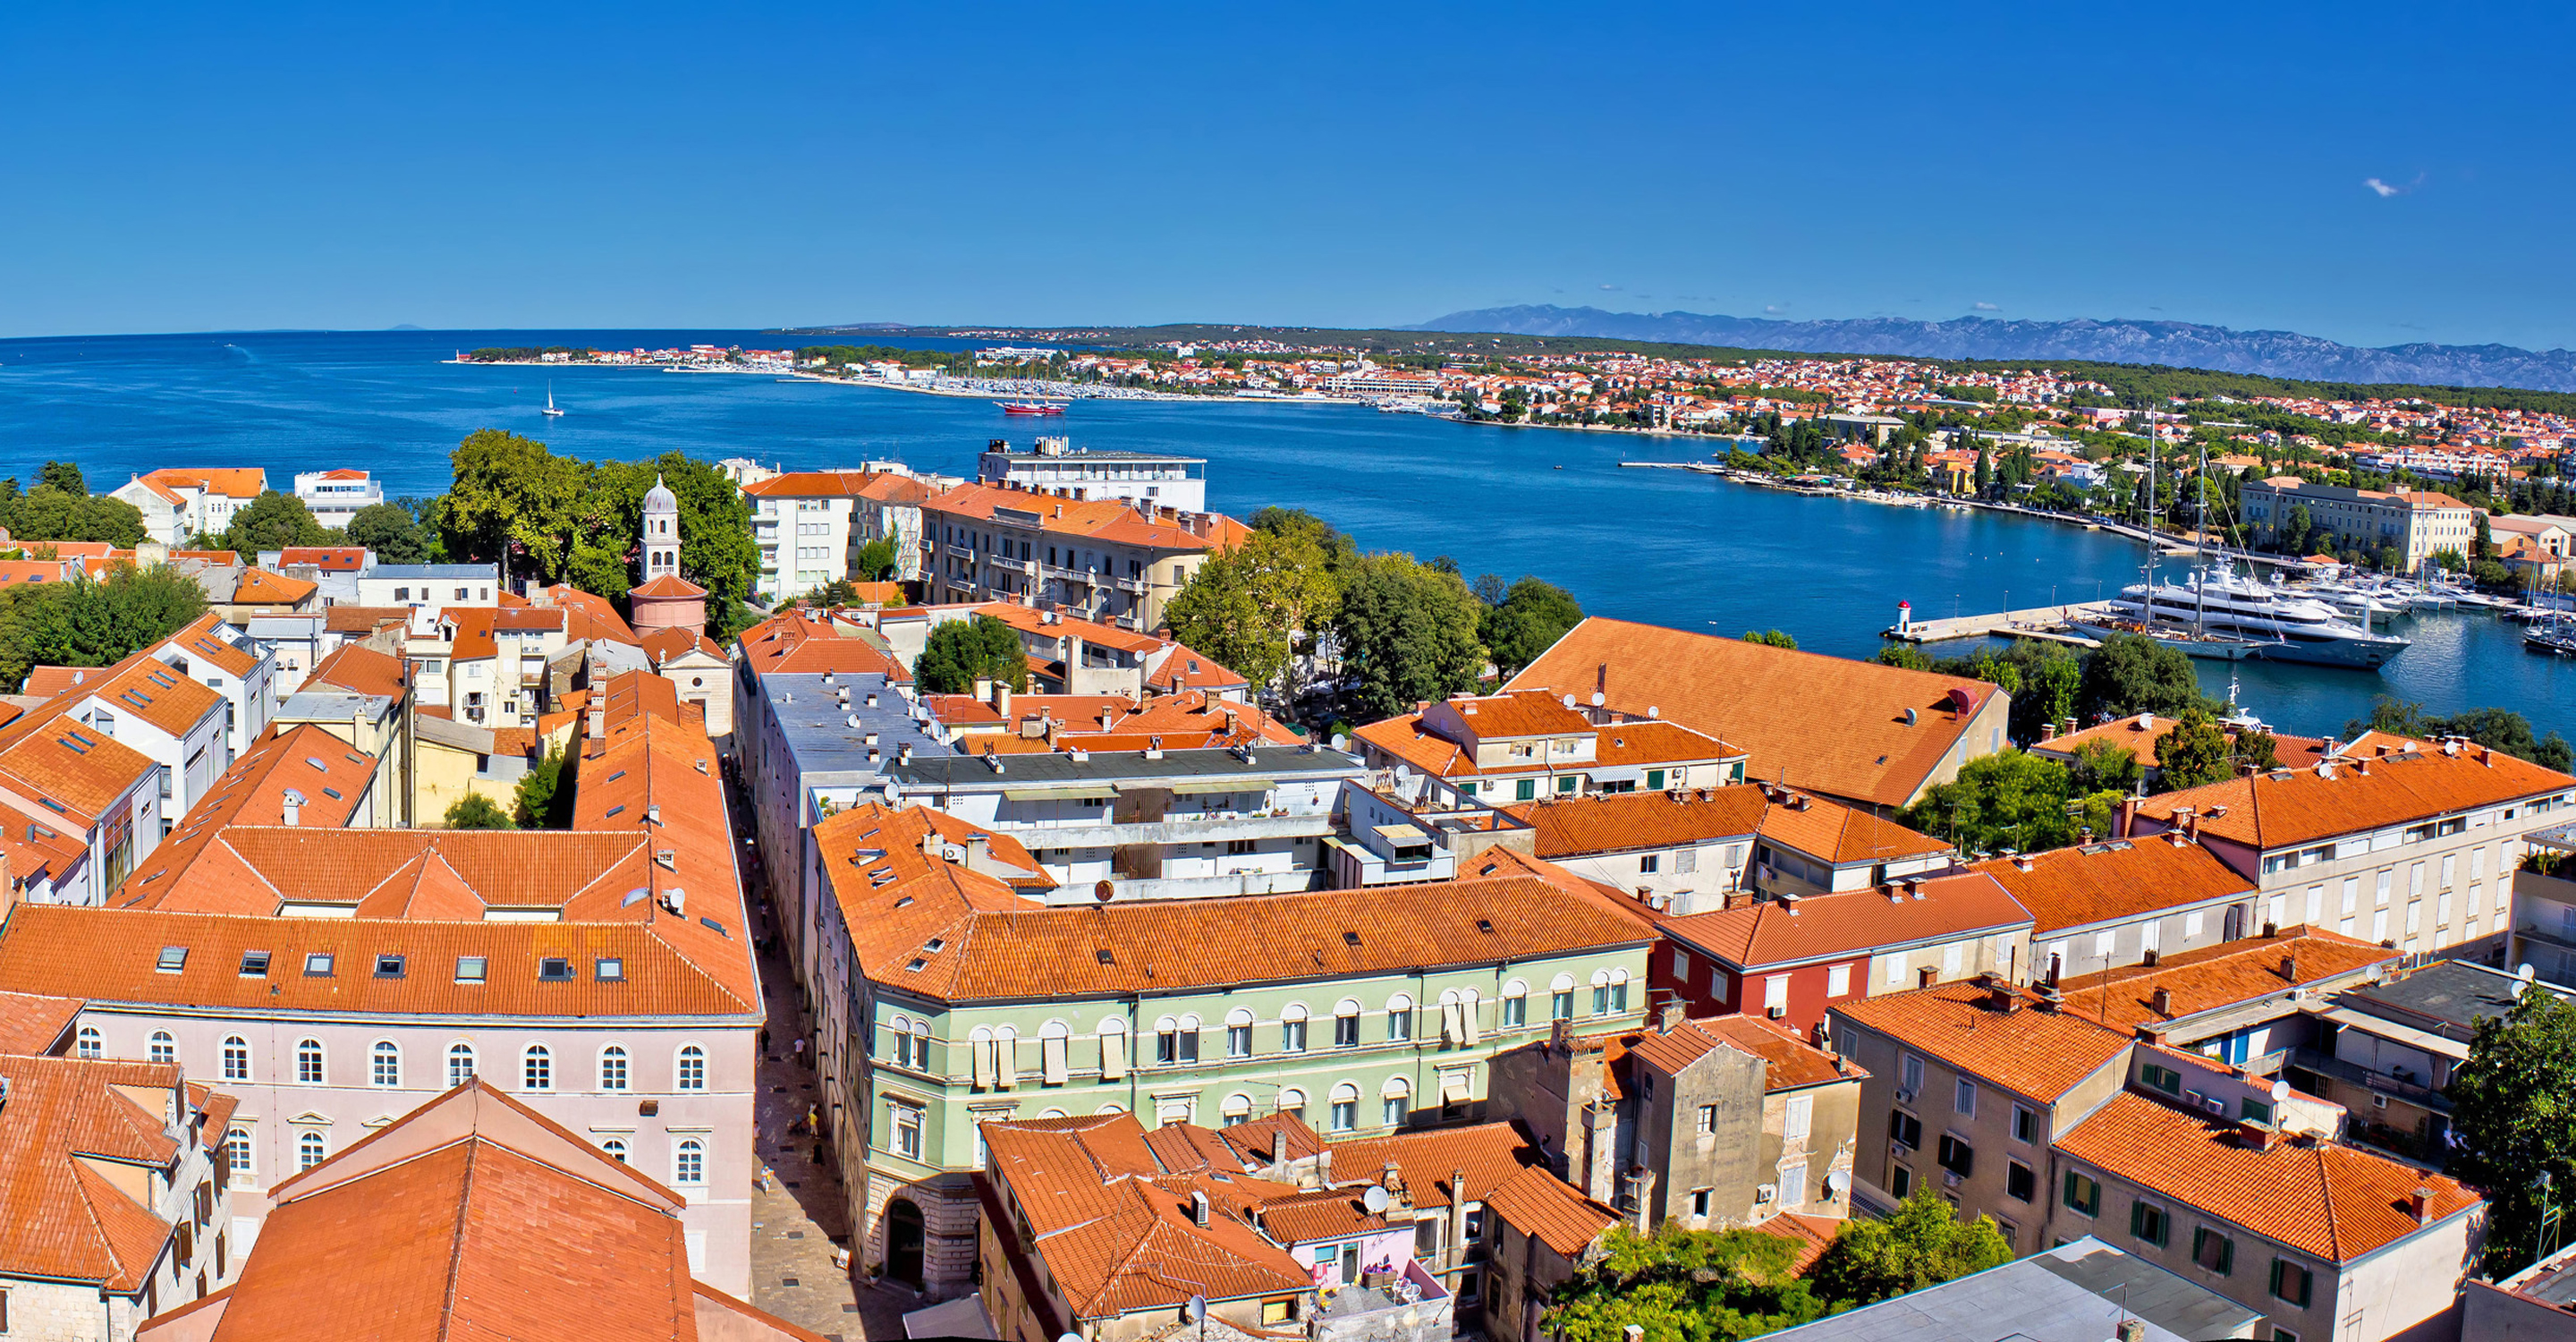 Aerial view of the town of Zadar, Dalmatia, Croatia